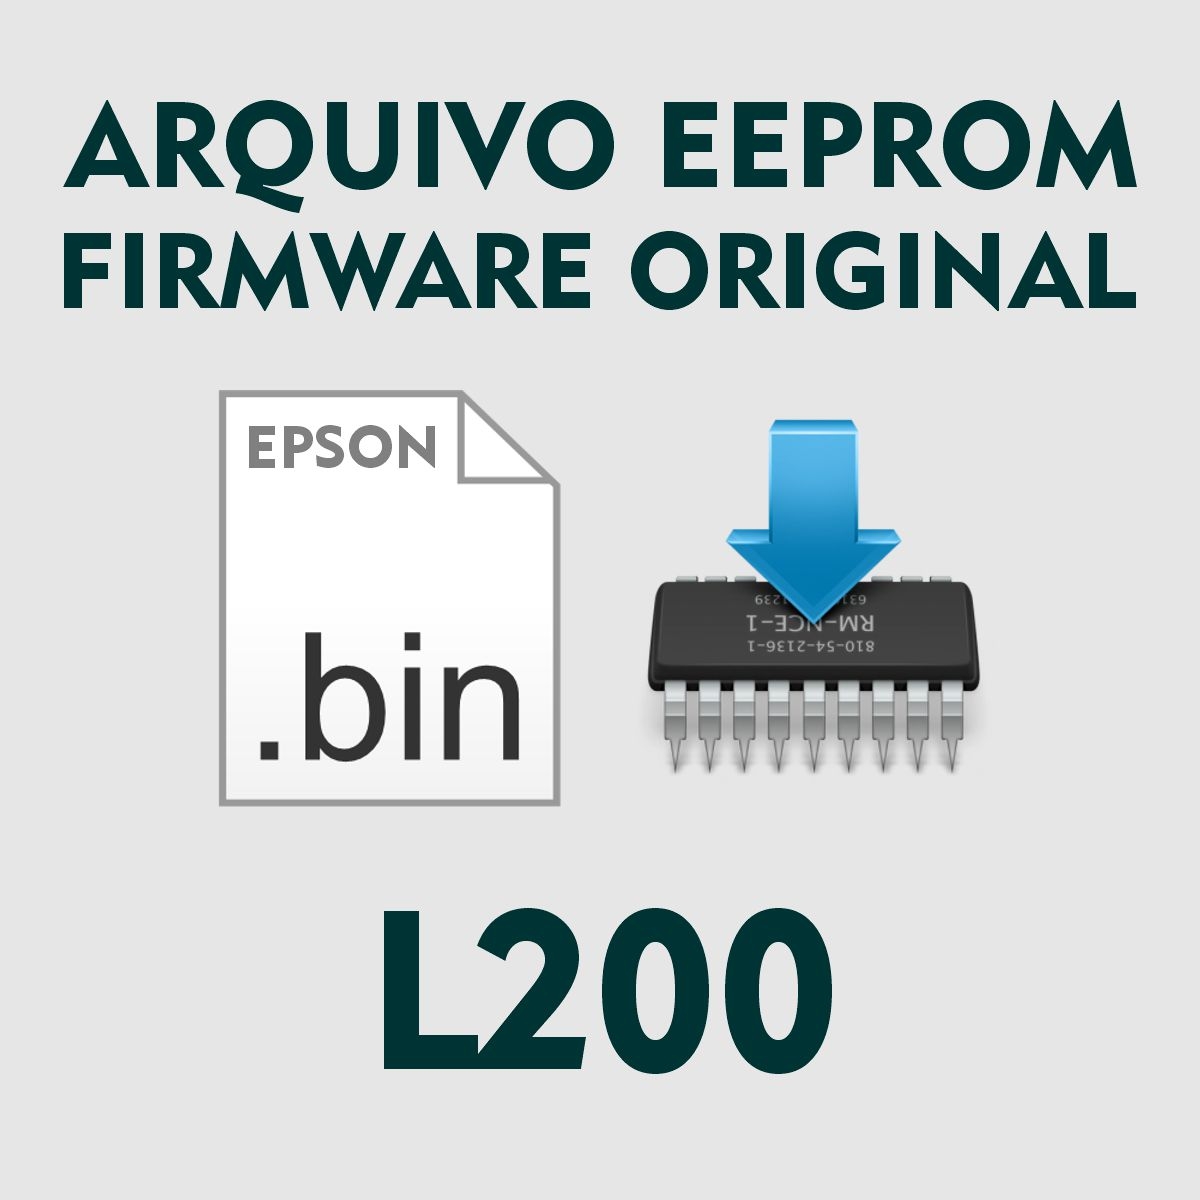 Epson L200 | Arquivo de Eeprom Firmware .bin - Original